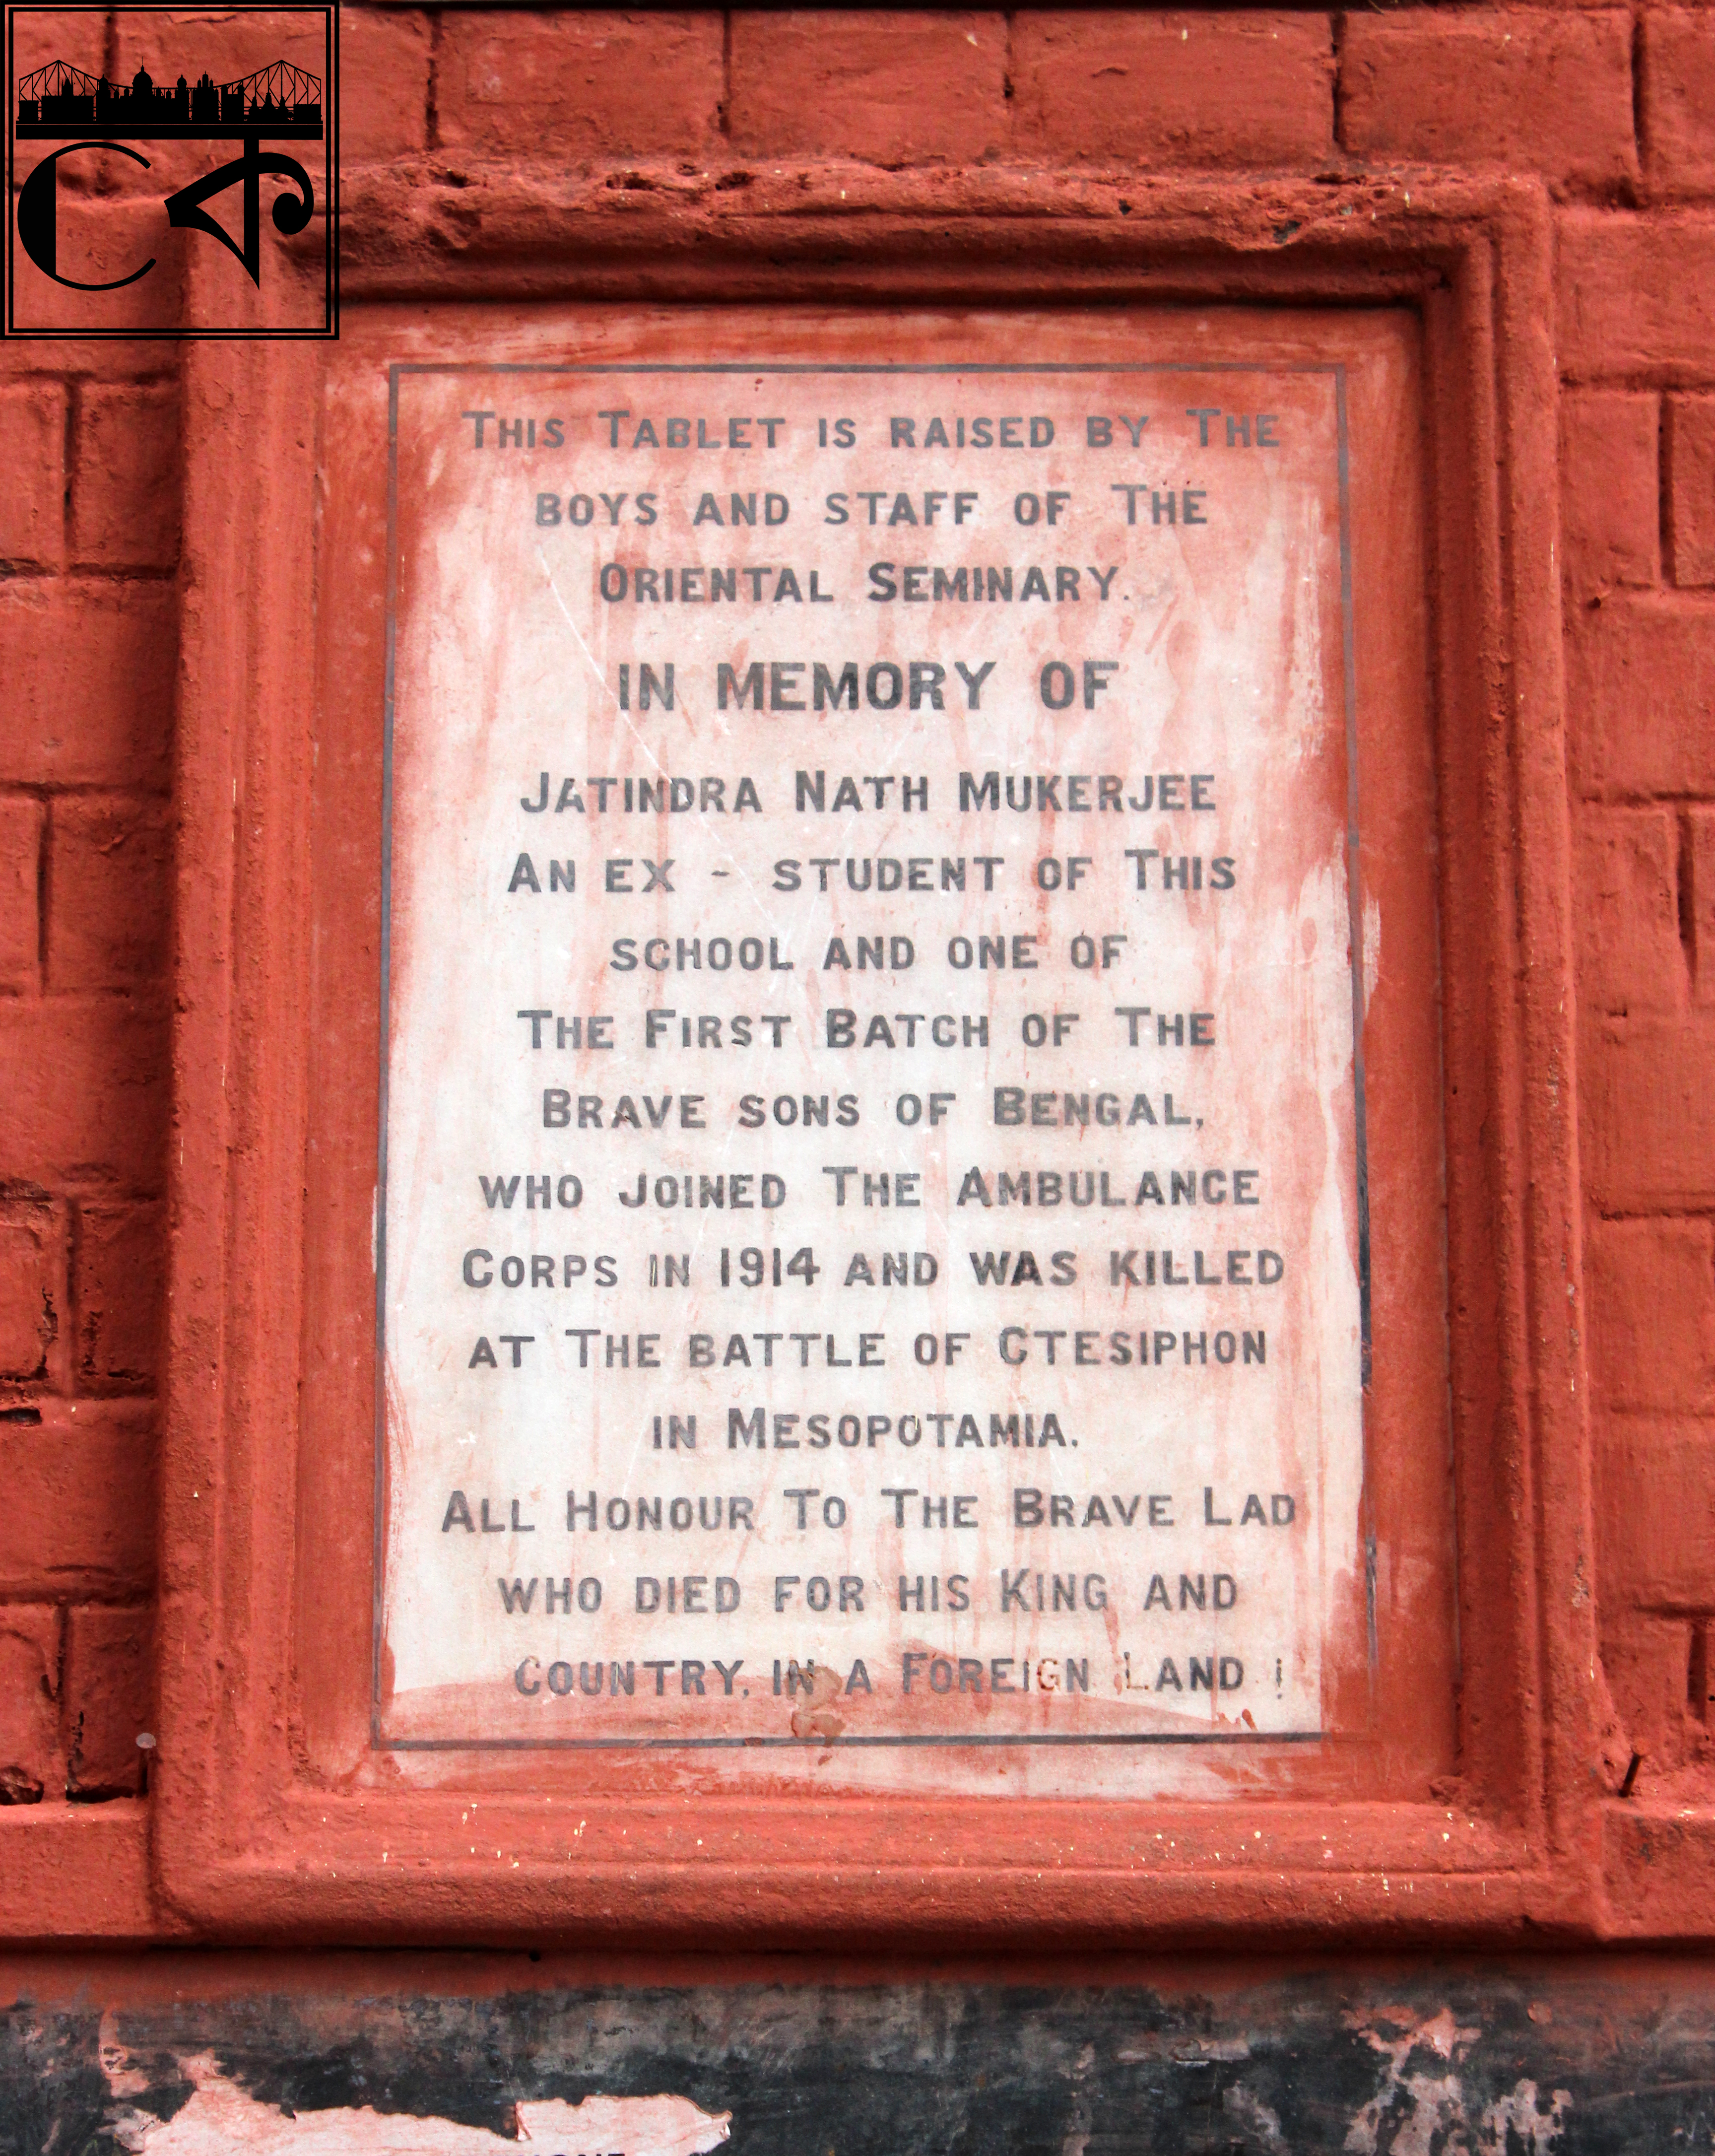 The plaque of Jatindra Nath Mukherjee at Oriental Seminary